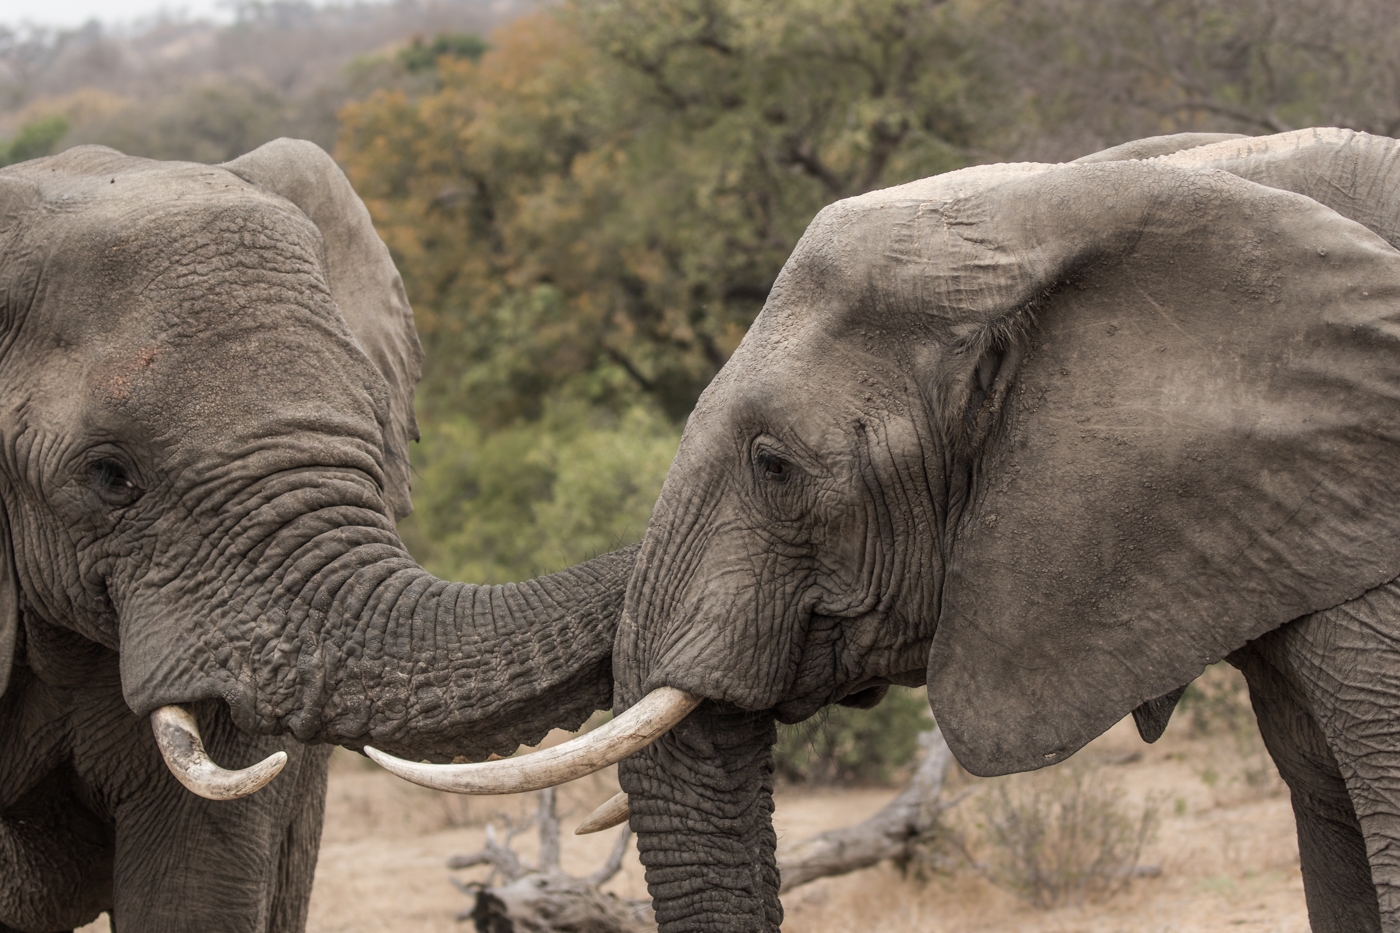 why do elephants have trunks